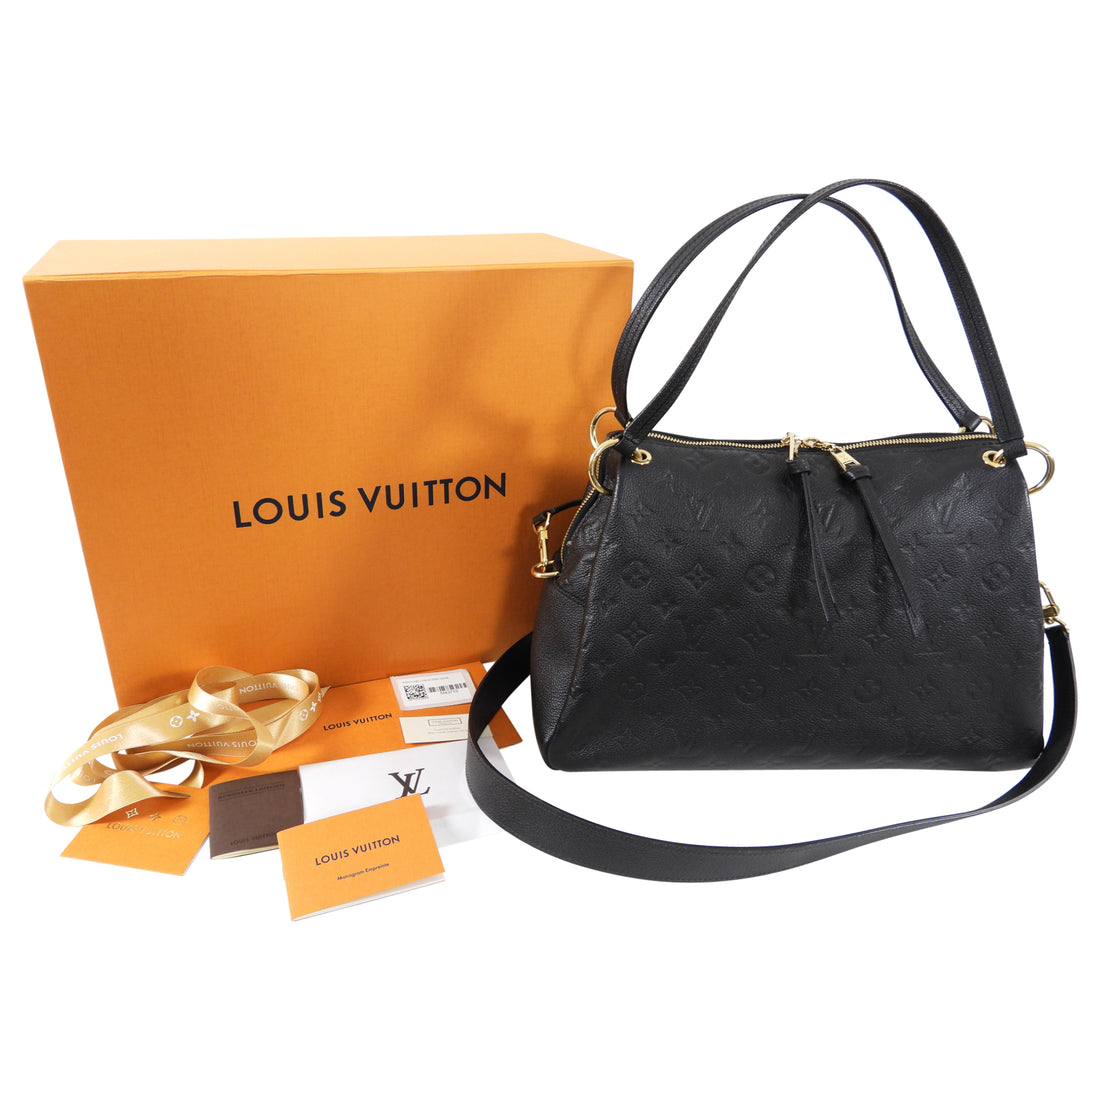 Louis Vuitton Empreinte Ponthieu Pm Marine Rouge 572842